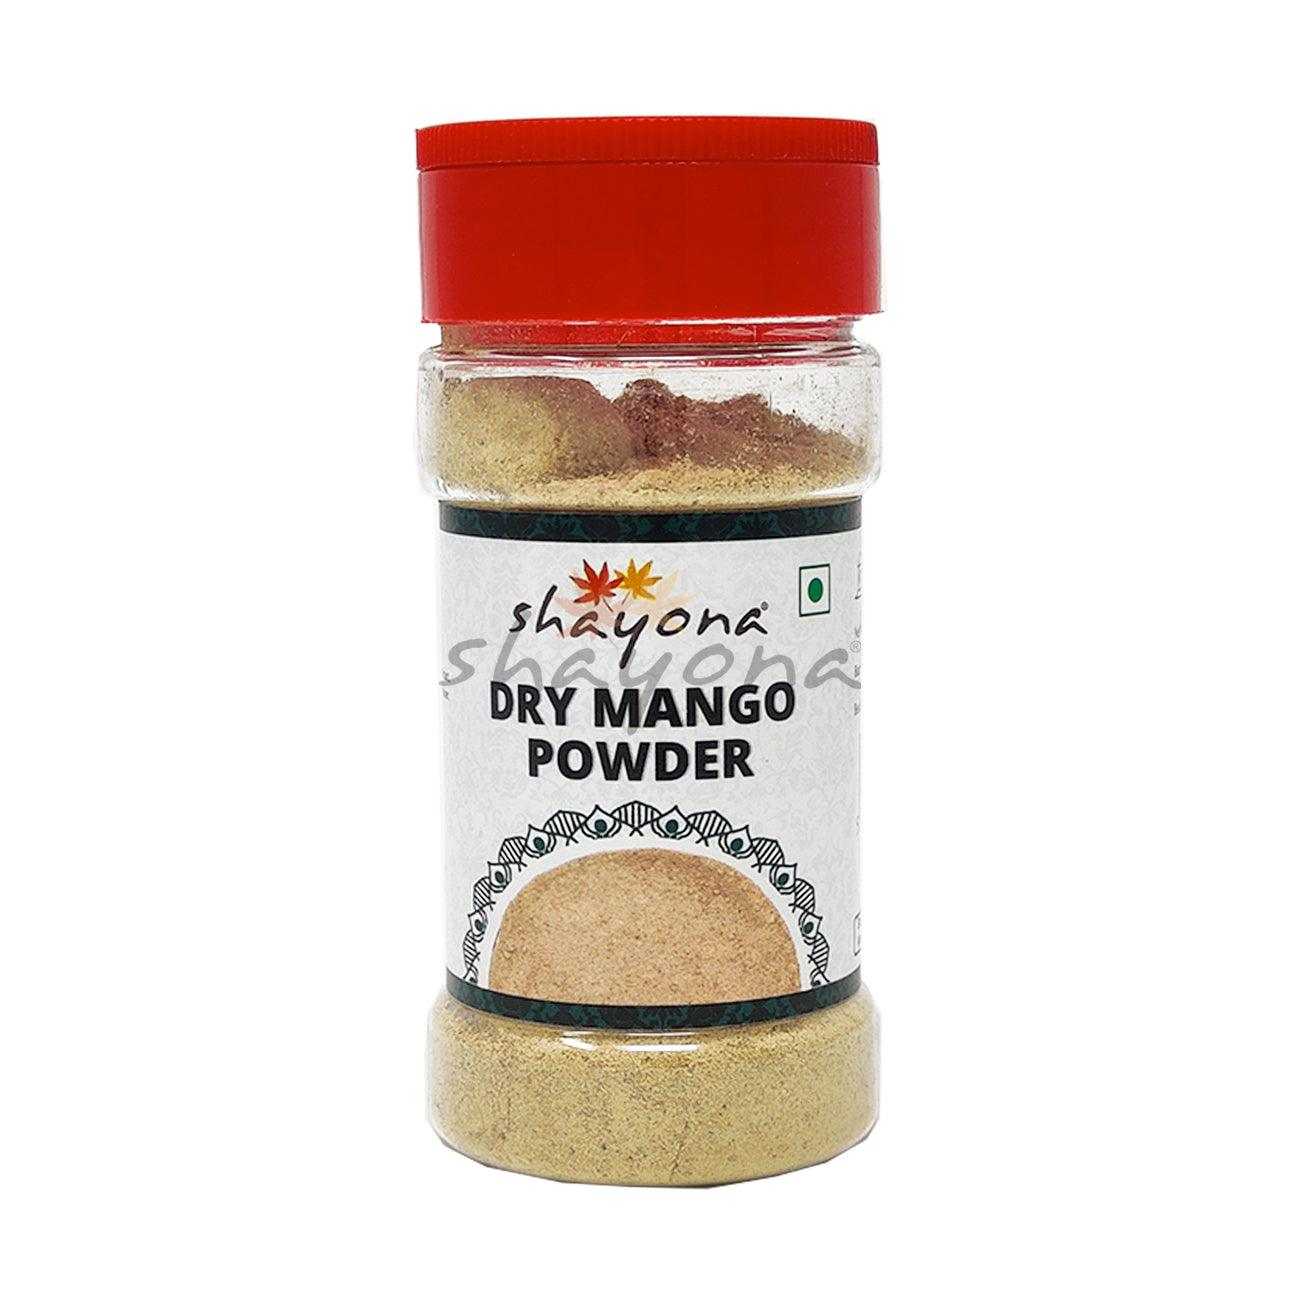 Shayona Dry Mango Powder